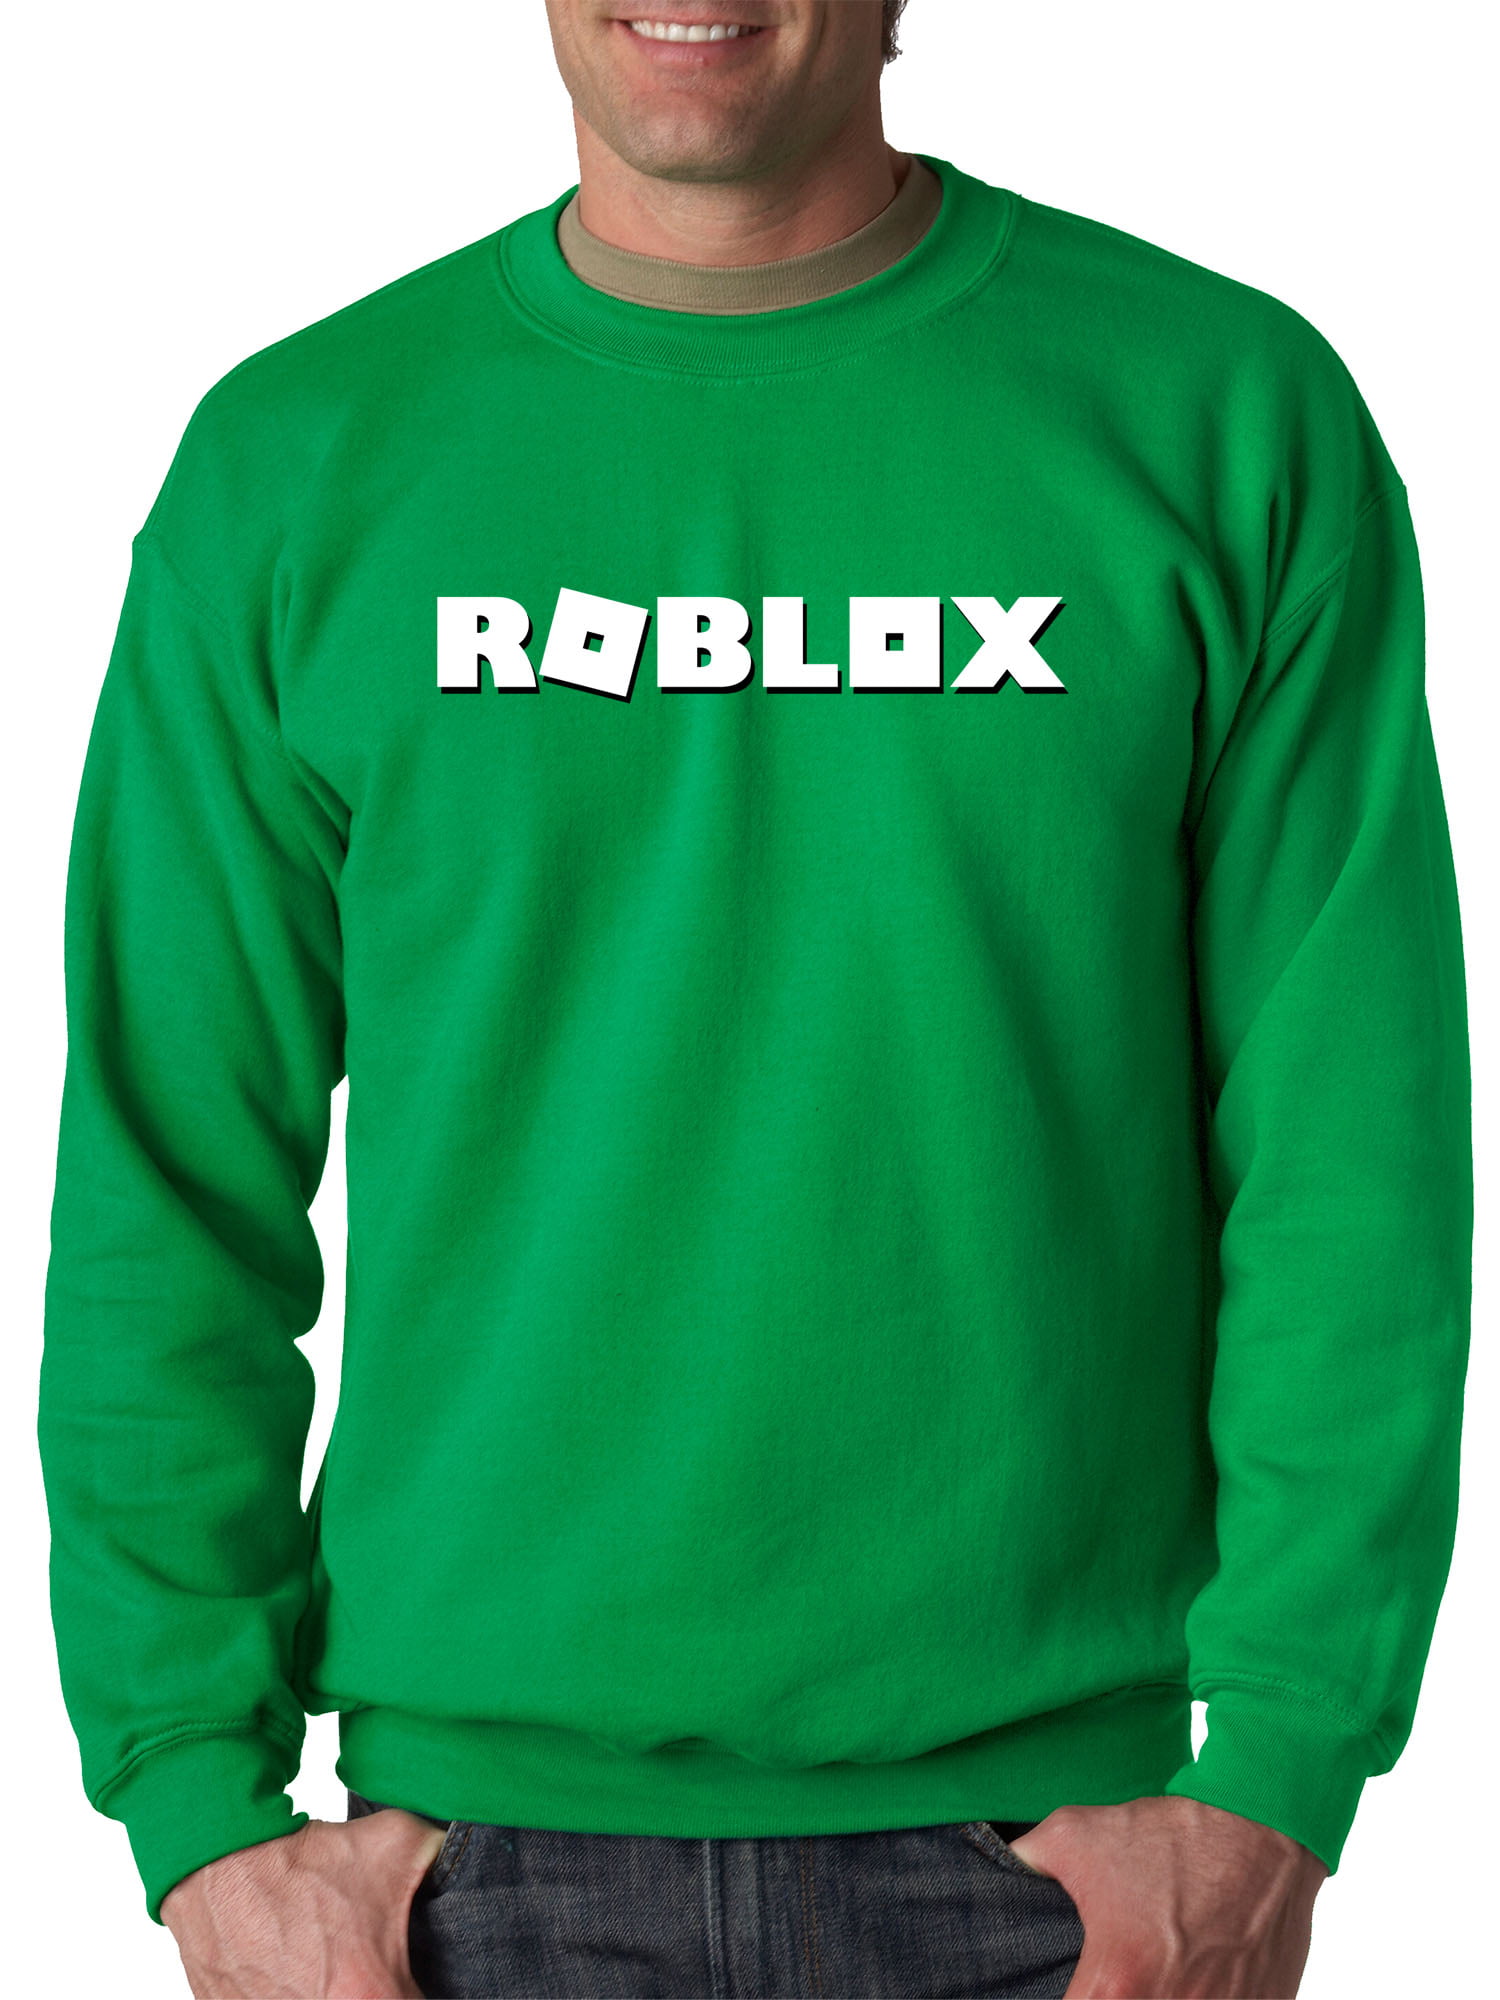 Trendy Usa 923 Crewneck Roblox Logo Game Accent Sweatshirt Small Kelly Green Walmart Com Walmart Com - hoodie green t shirt roblox